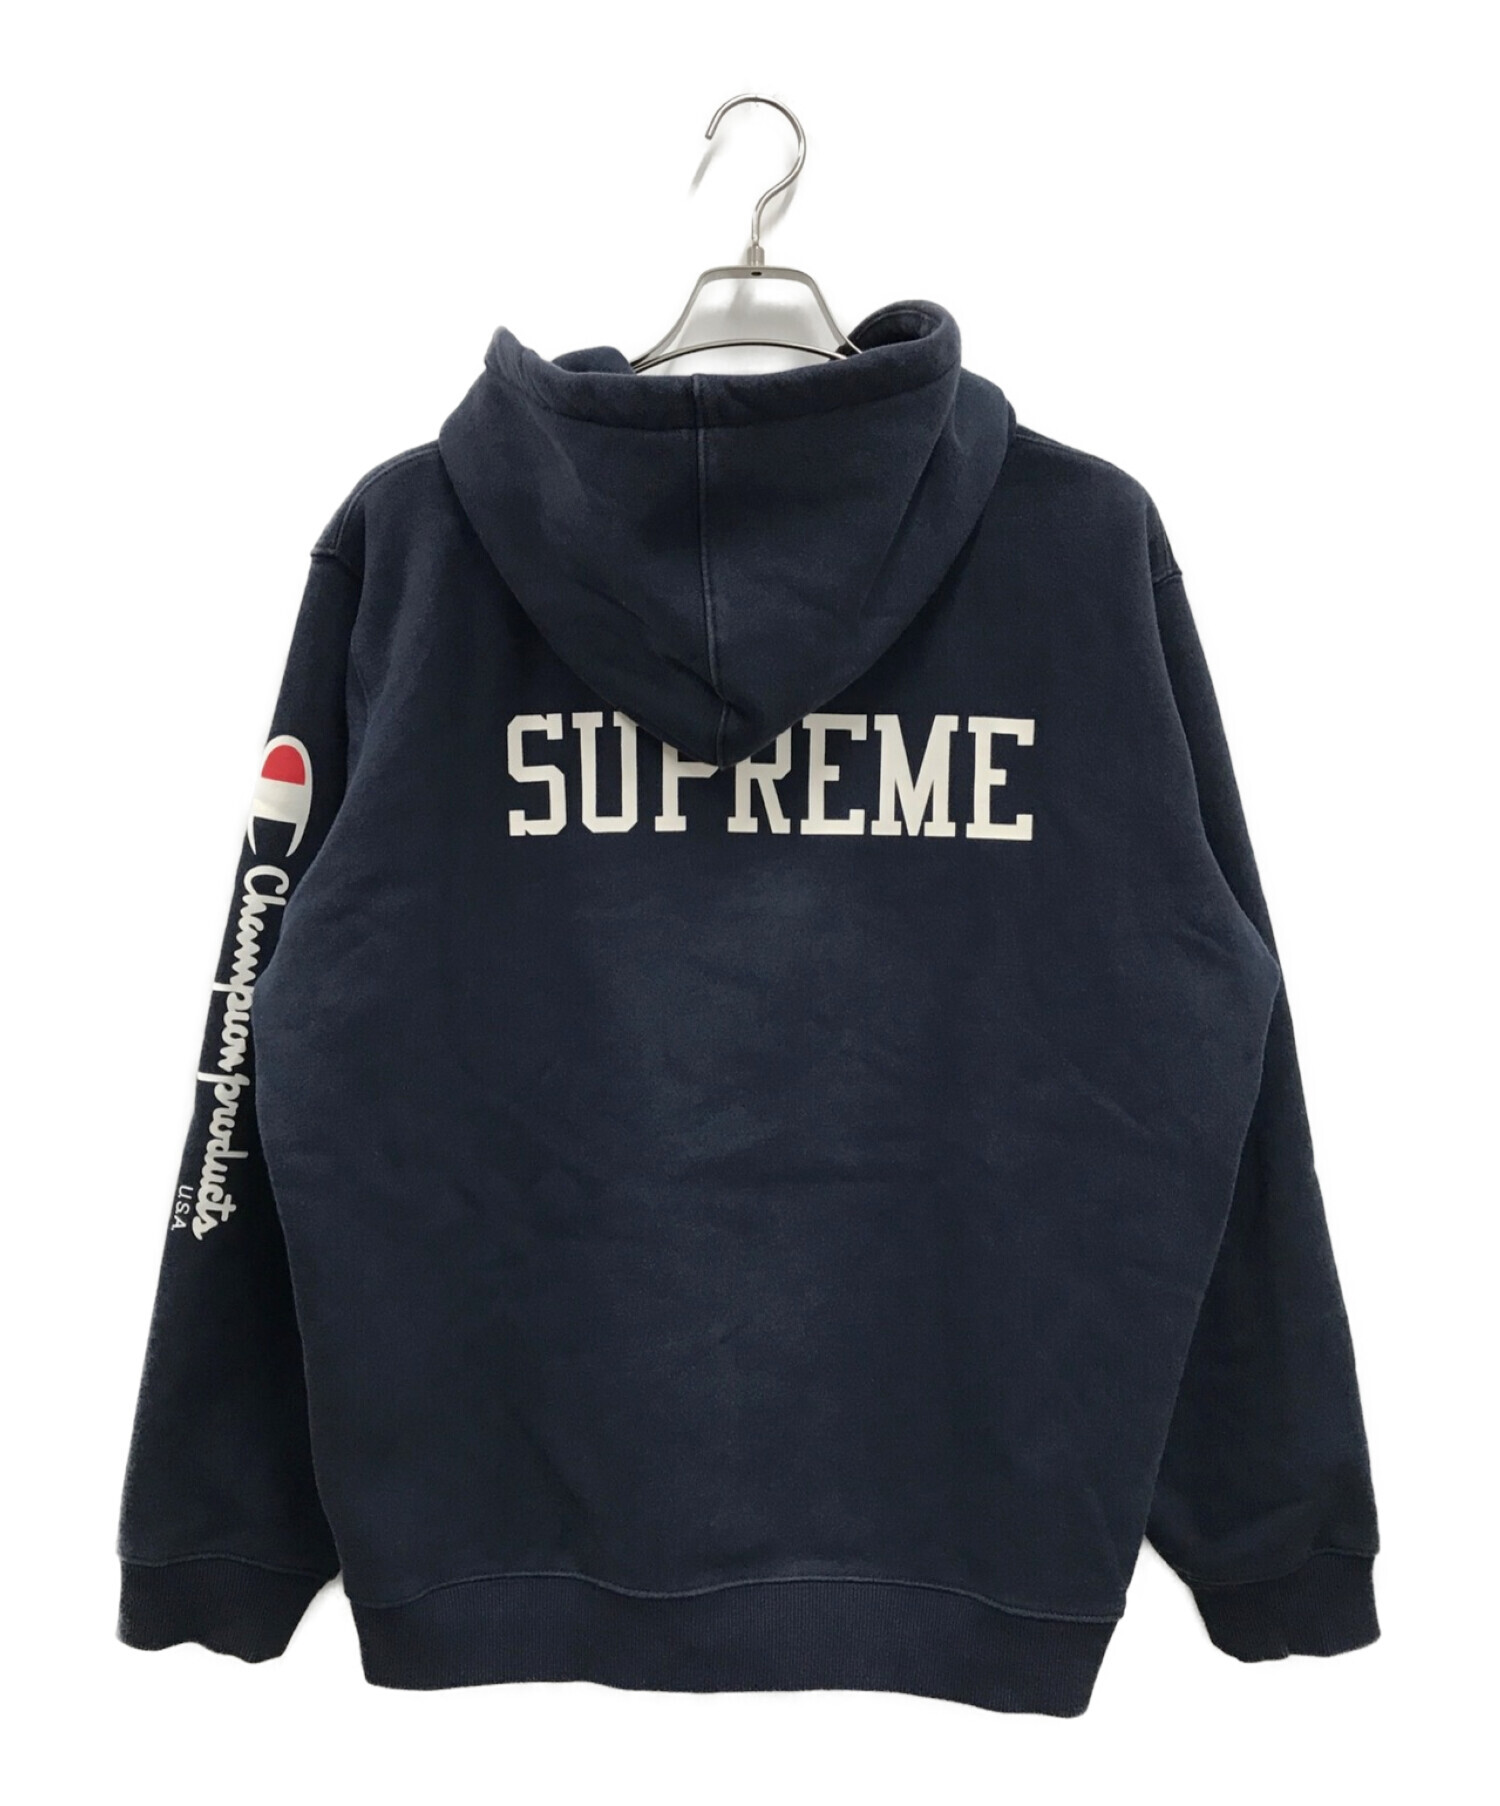 Supreme (シュプリーム) Champion (チャンピオン) Hooded Sweatshirt ネイビー サイズ:L